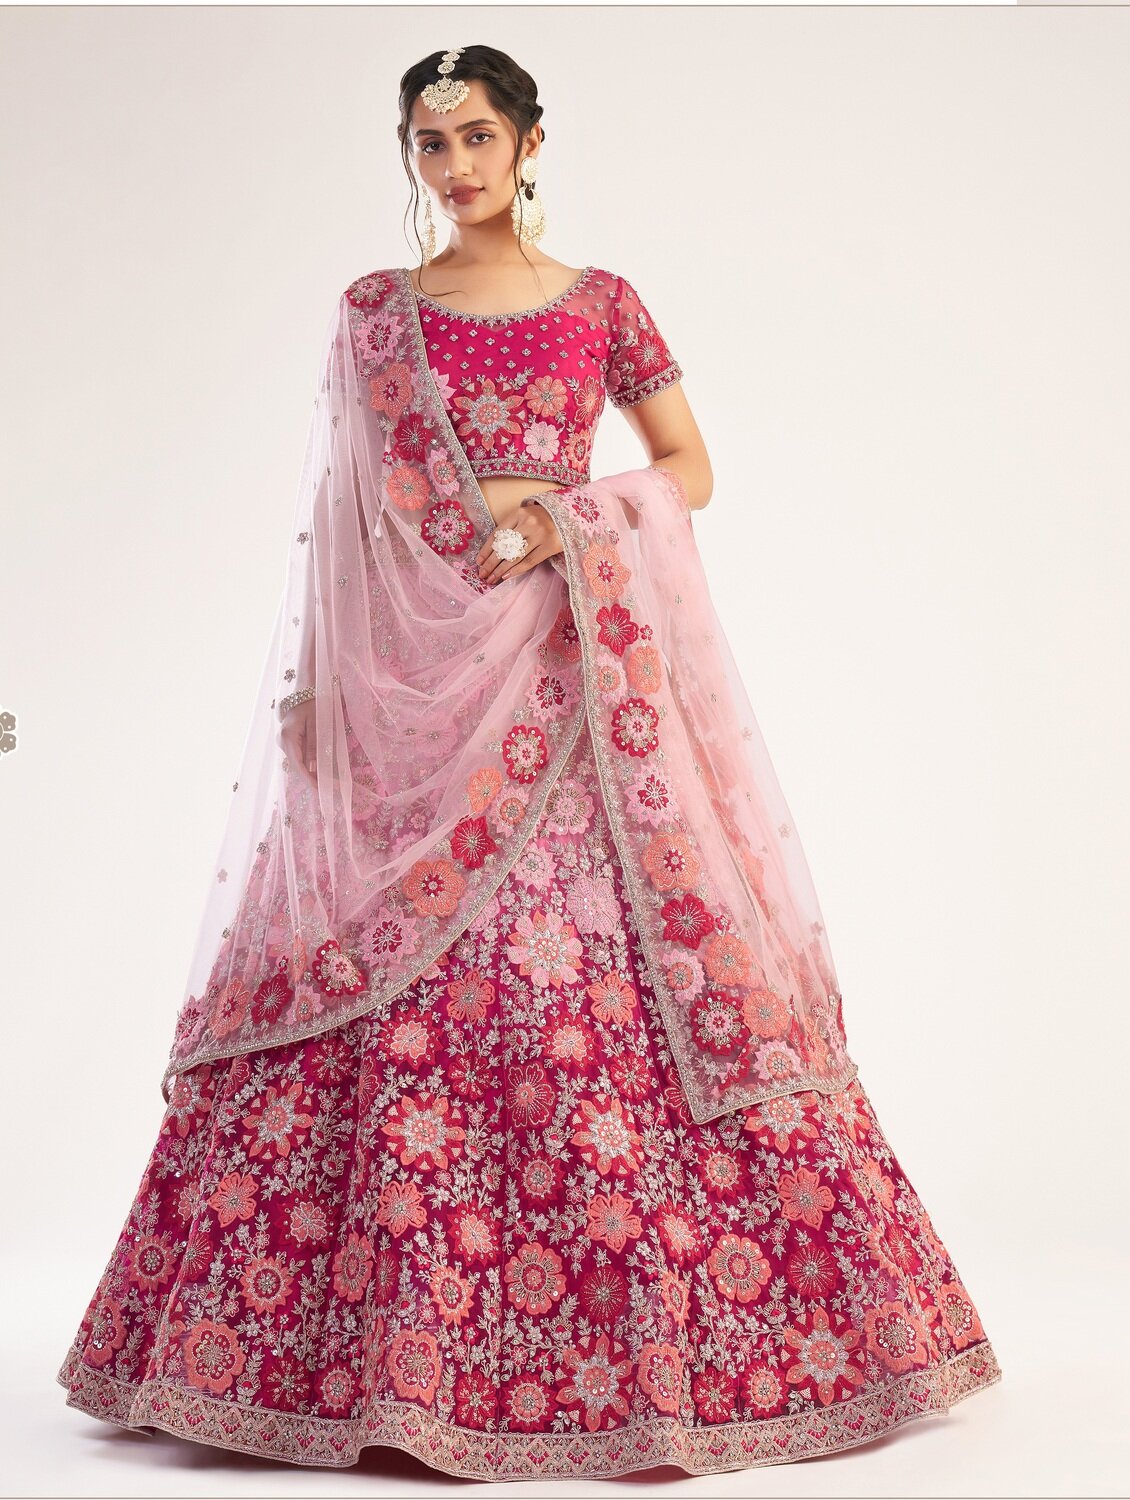 Gorgeous Rani Pink Heavy Embroidered Lehenga Choli